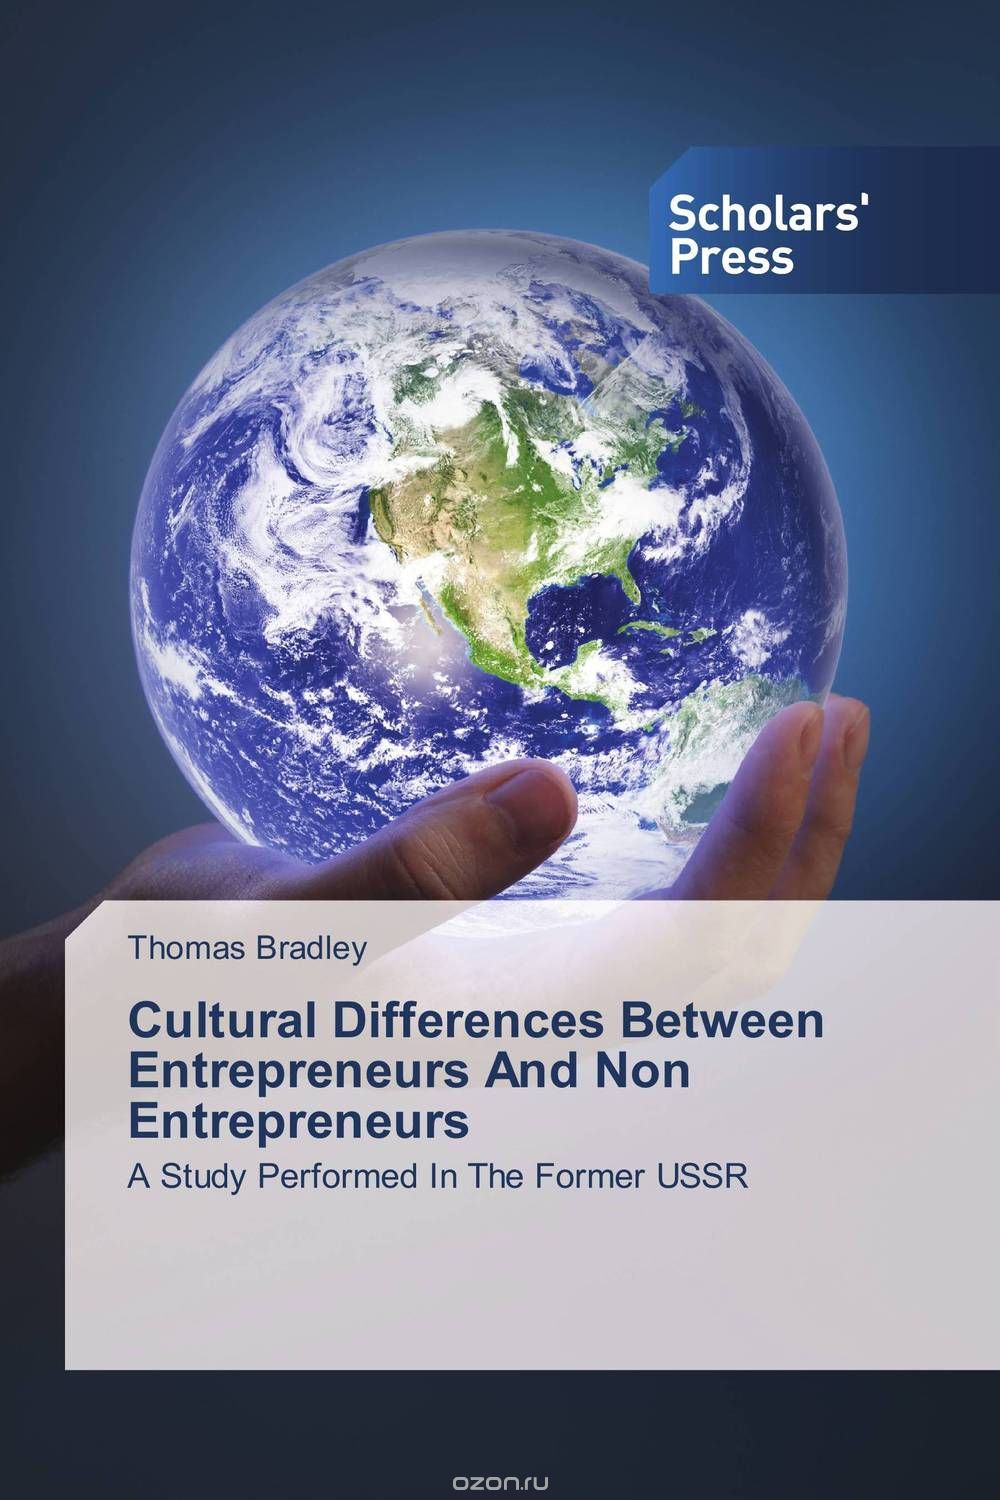 Скачать книгу "Cultural Differences Between Entrepreneurs And Non Entrepreneurs"